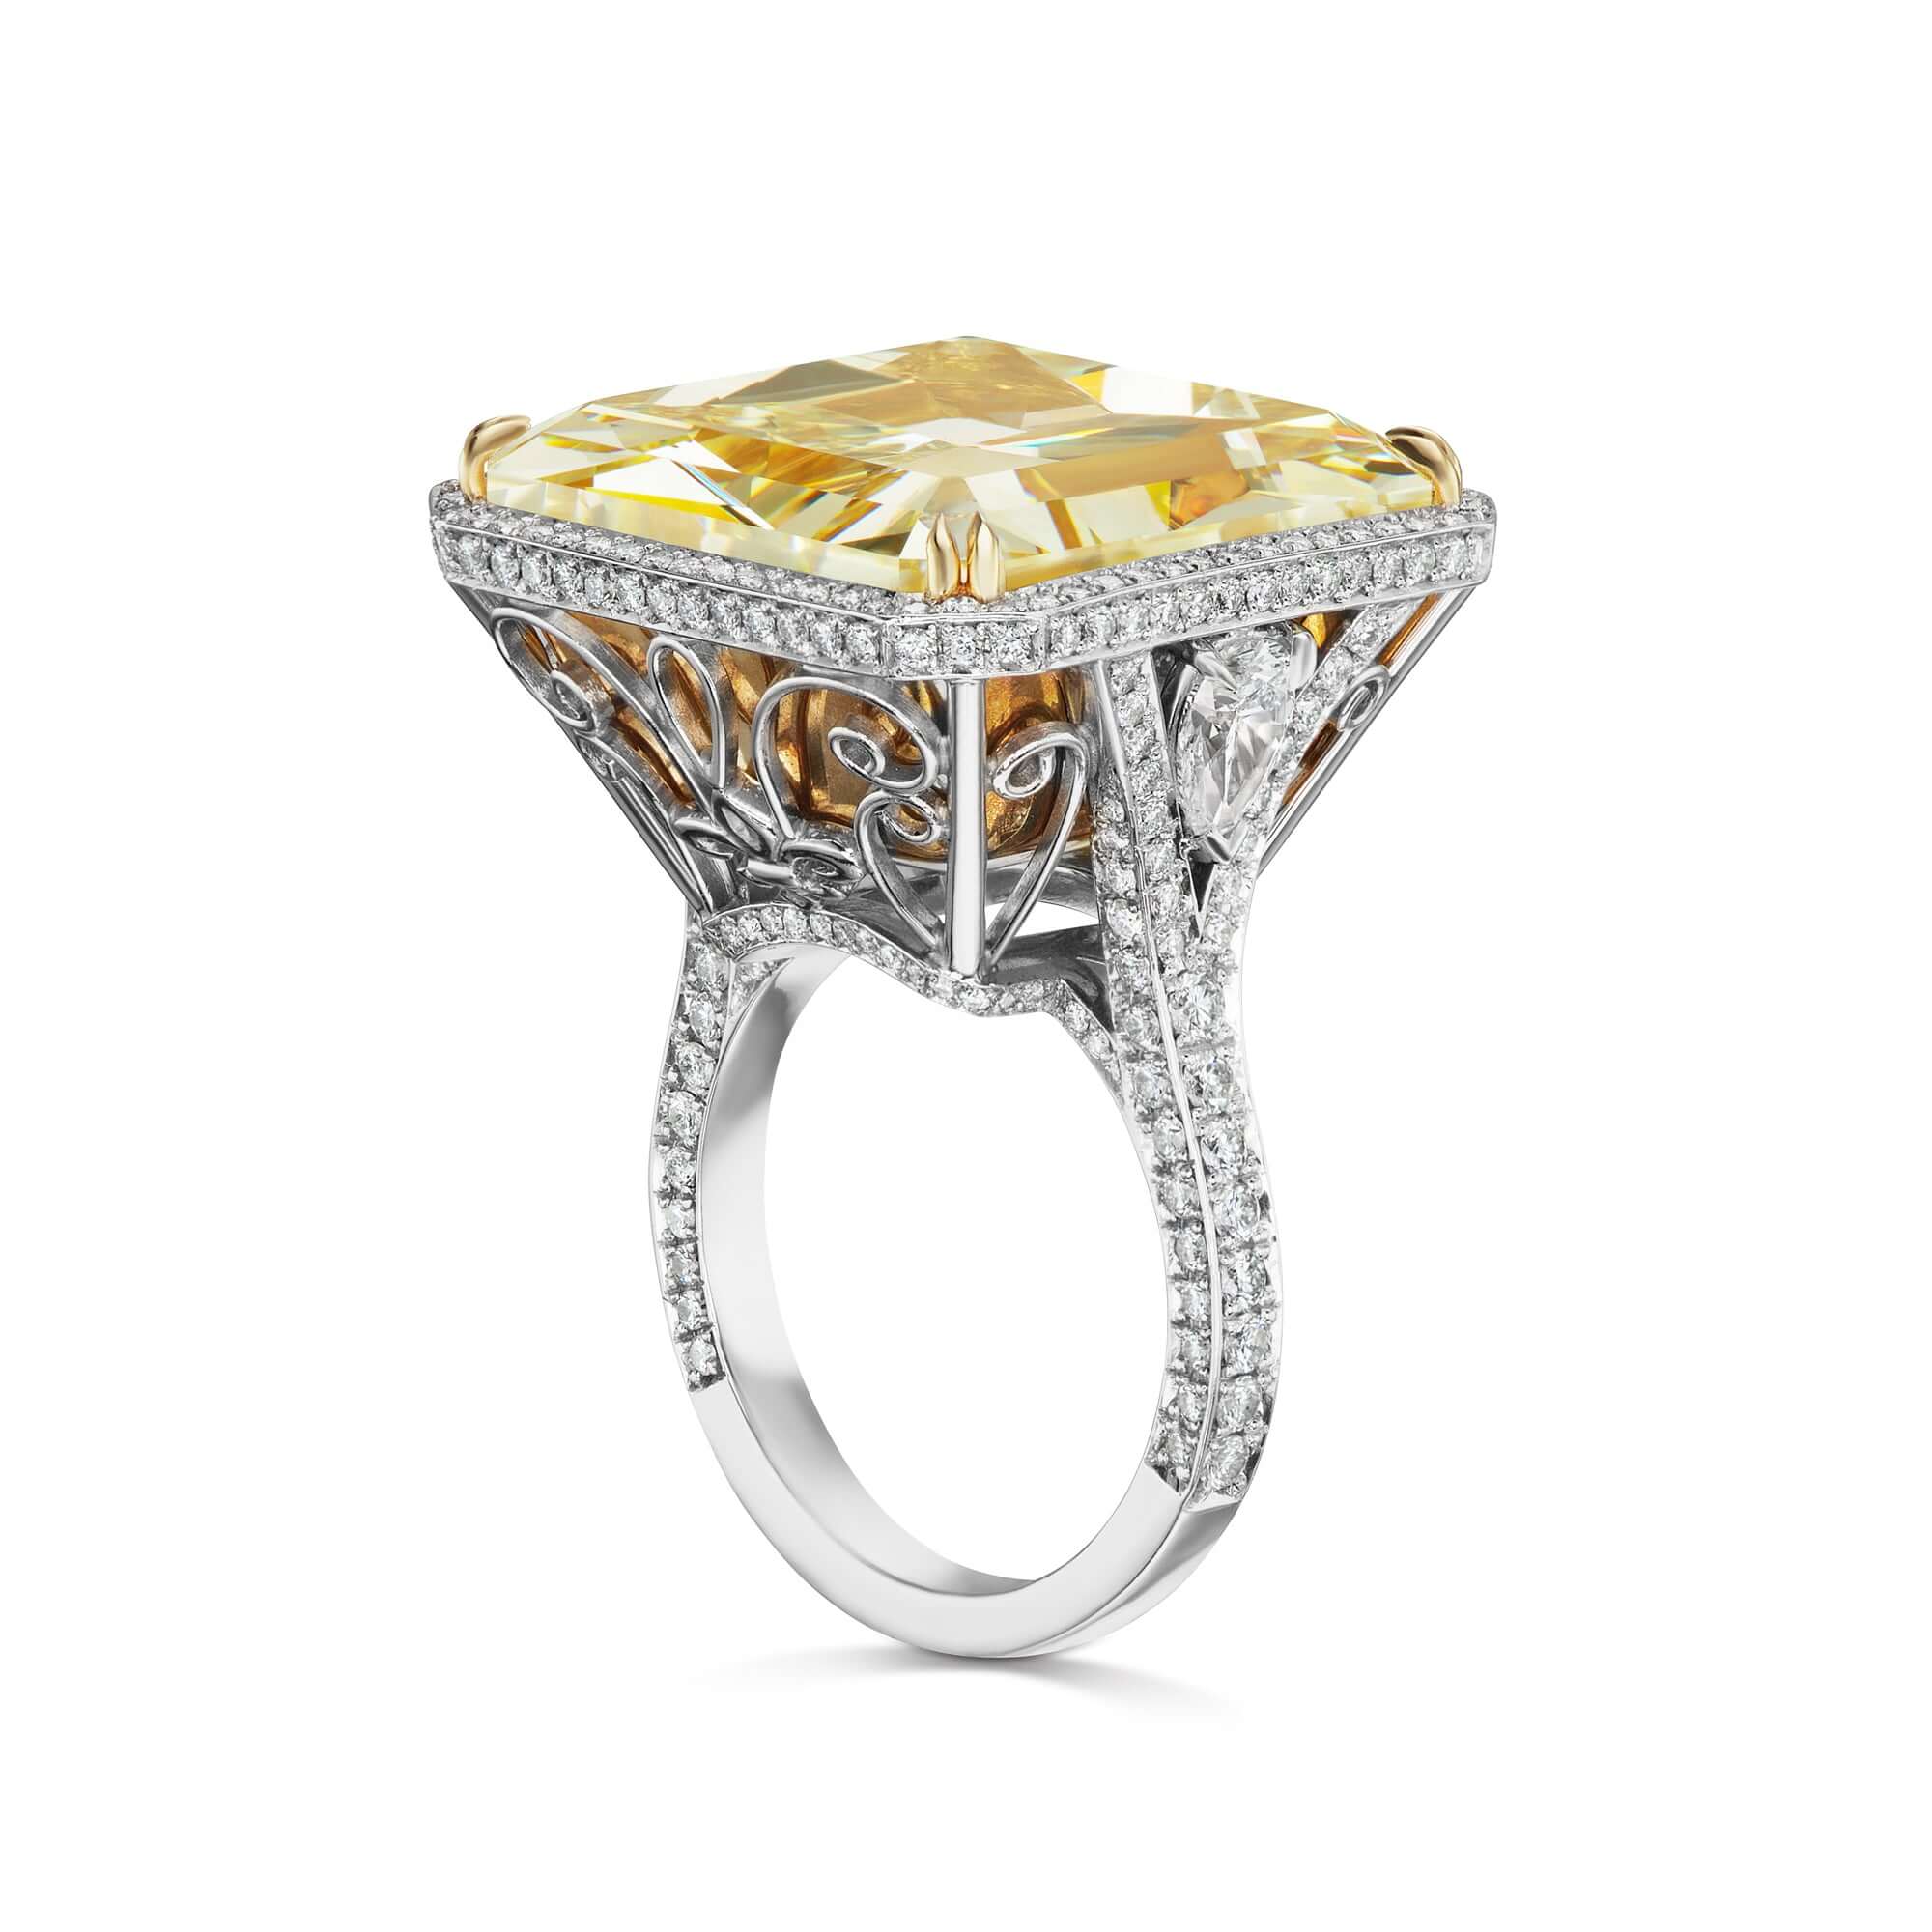 40 carat radiant cut fancy yellow diamond engagement ring